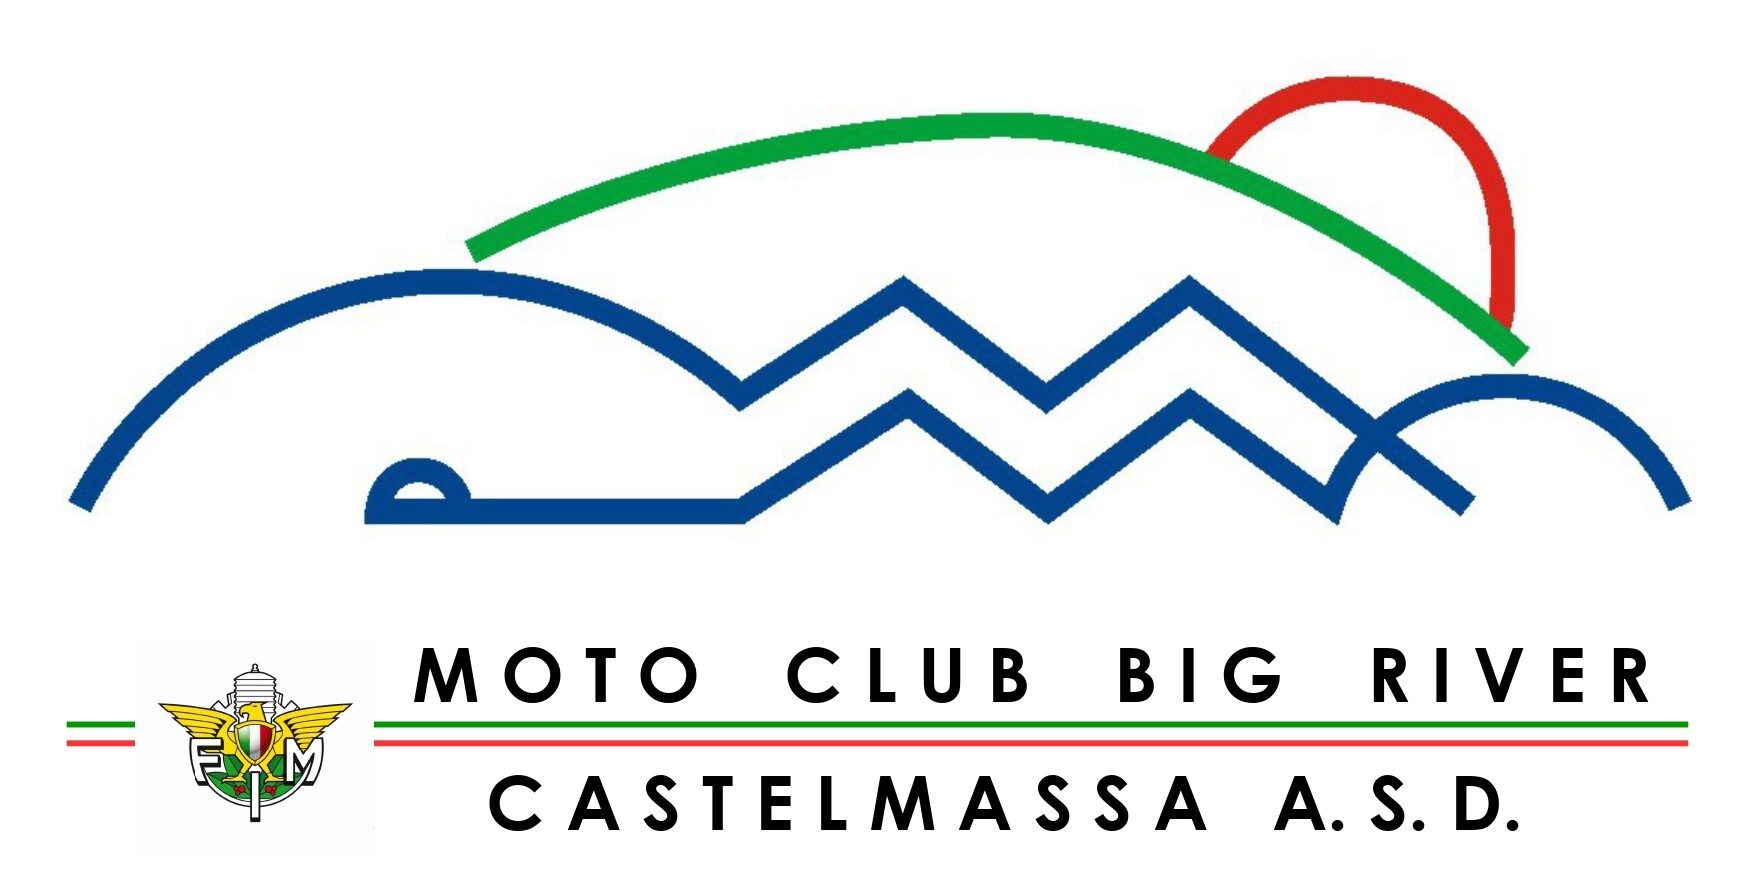 – MOTO CLUB BIG RIVER – CASTELMASSA A.S.D.